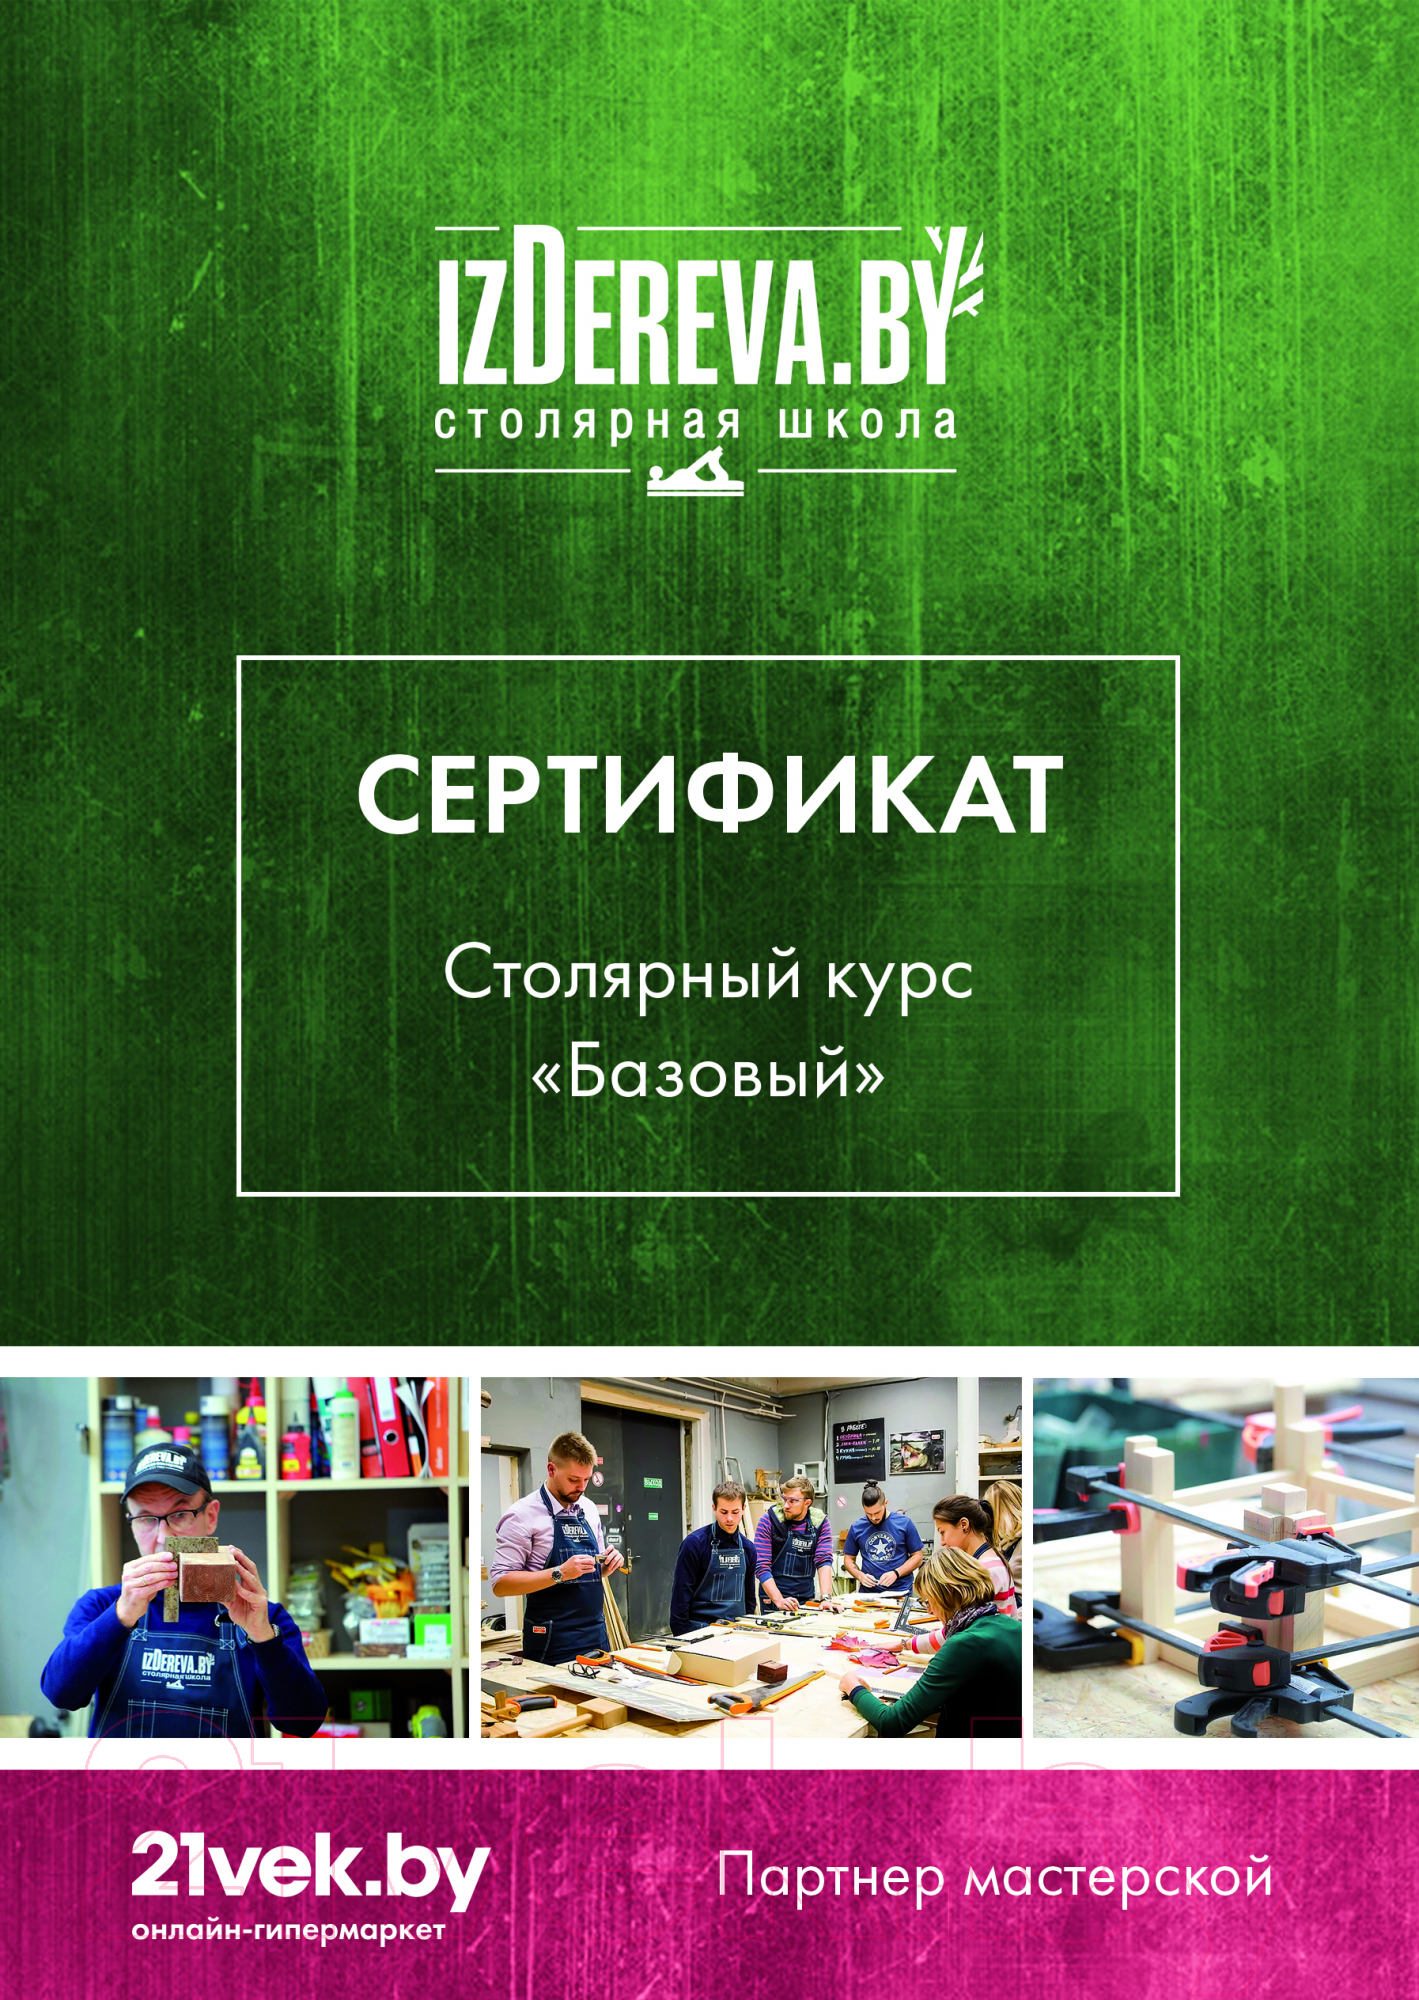 Сертификат на столярные курсы izDereva.by Базовый